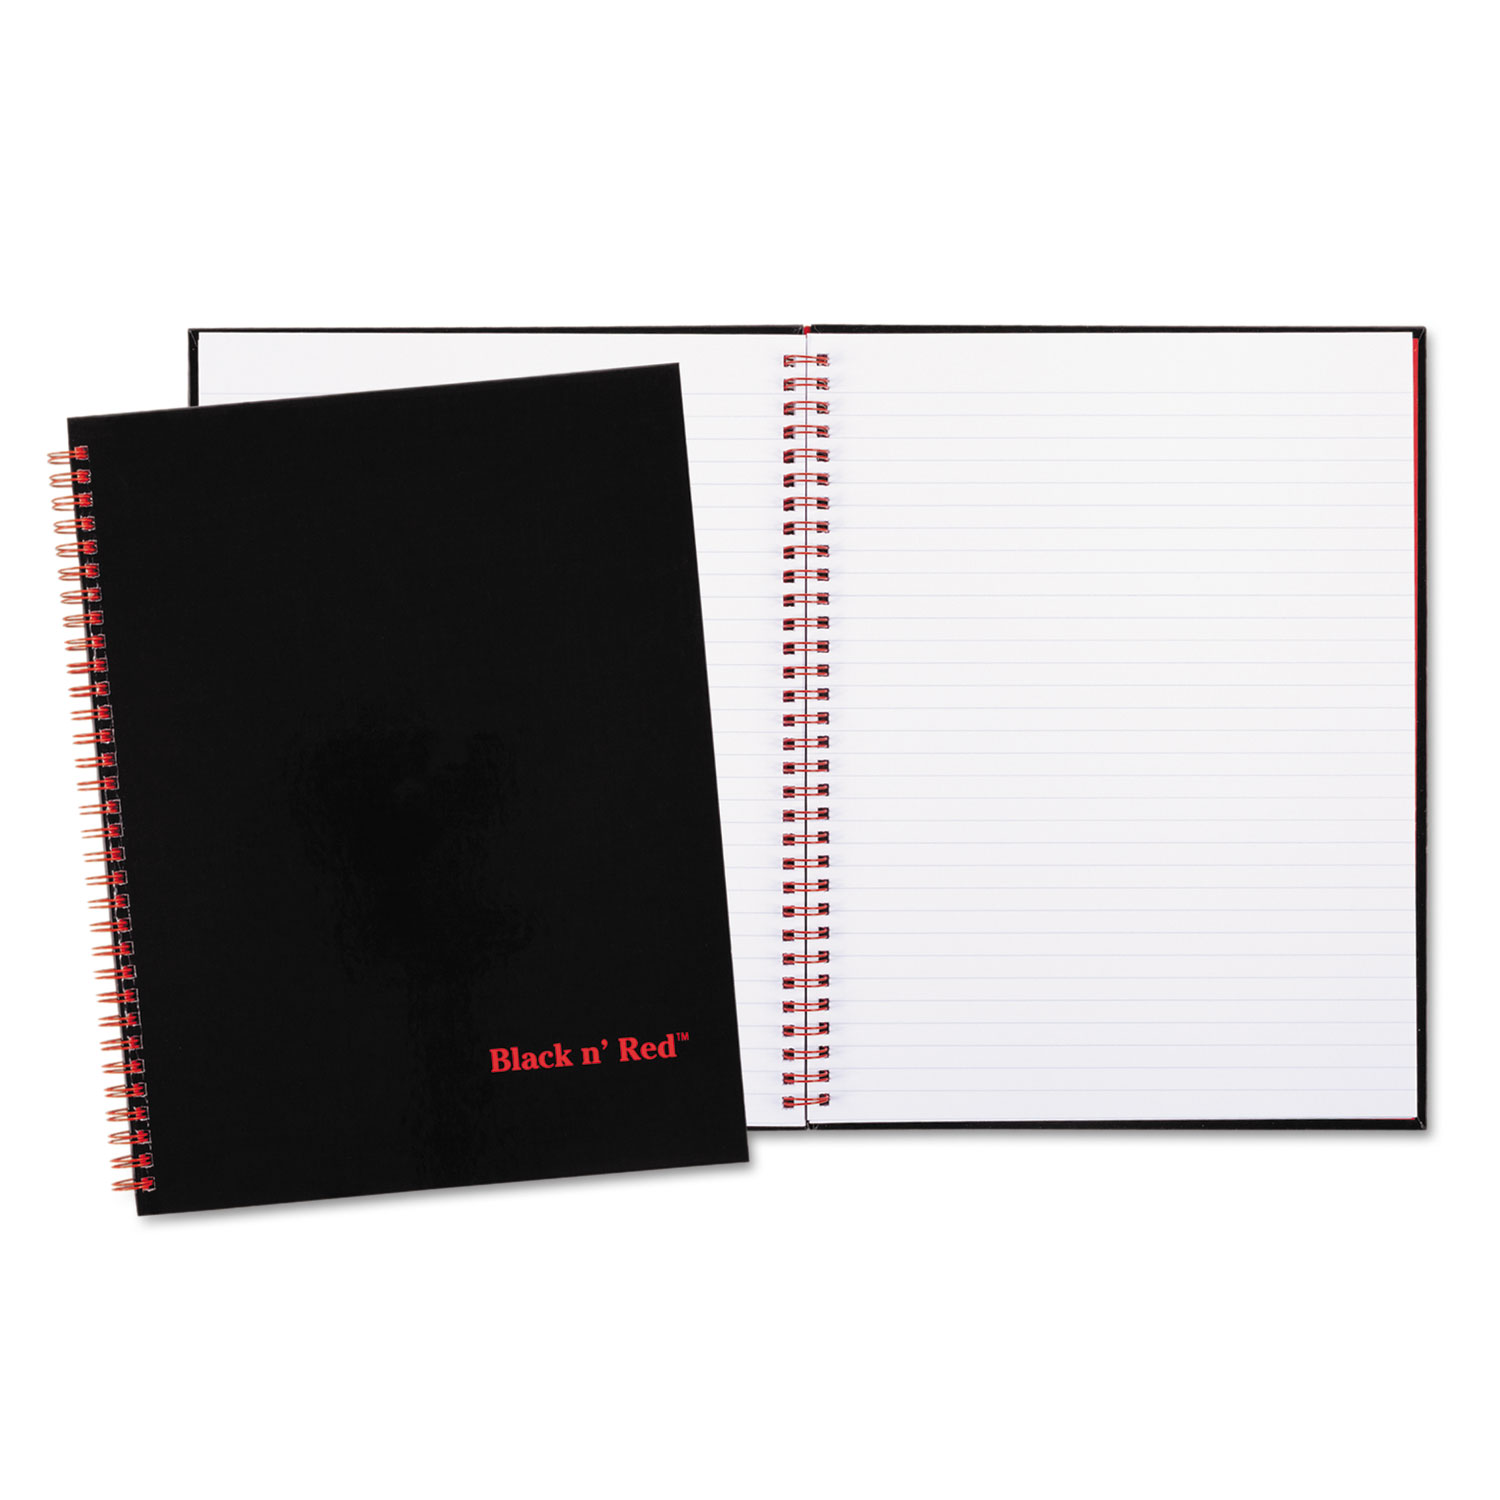  Black n' Red 67030 Twinwire Hardcover Notebook Plus Pack, Wide/Legal Rule, Black, 11 x 8.5, 70 Sheets, 2/Pack (JDK67030) 